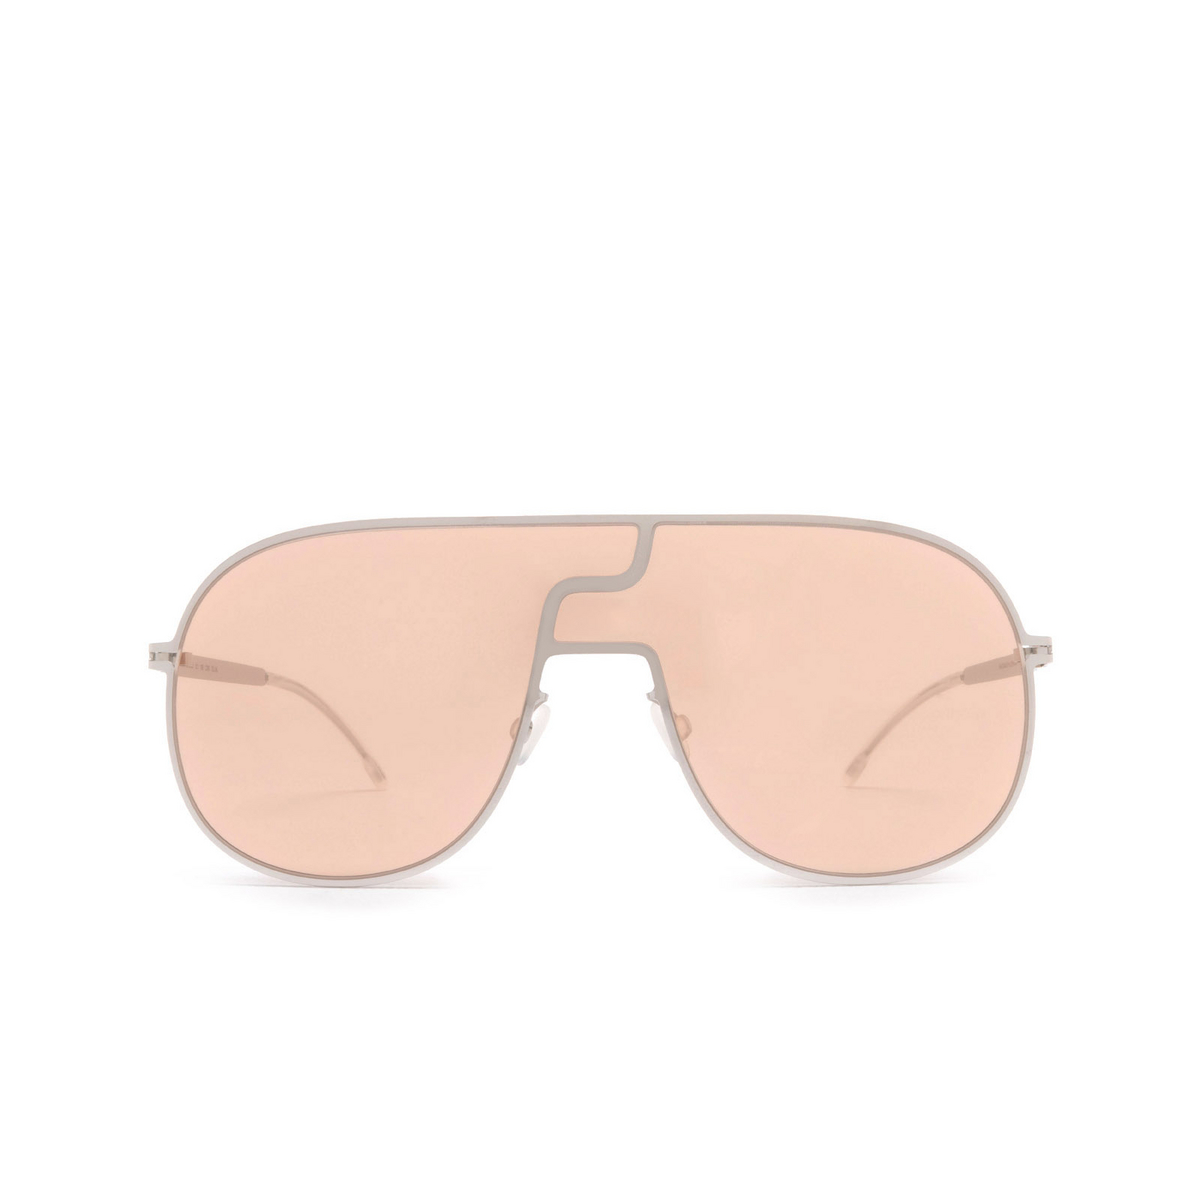 Mykita® Aviator Sunglasses: STUDIO12.1 color 051 Shiny Silver - front view